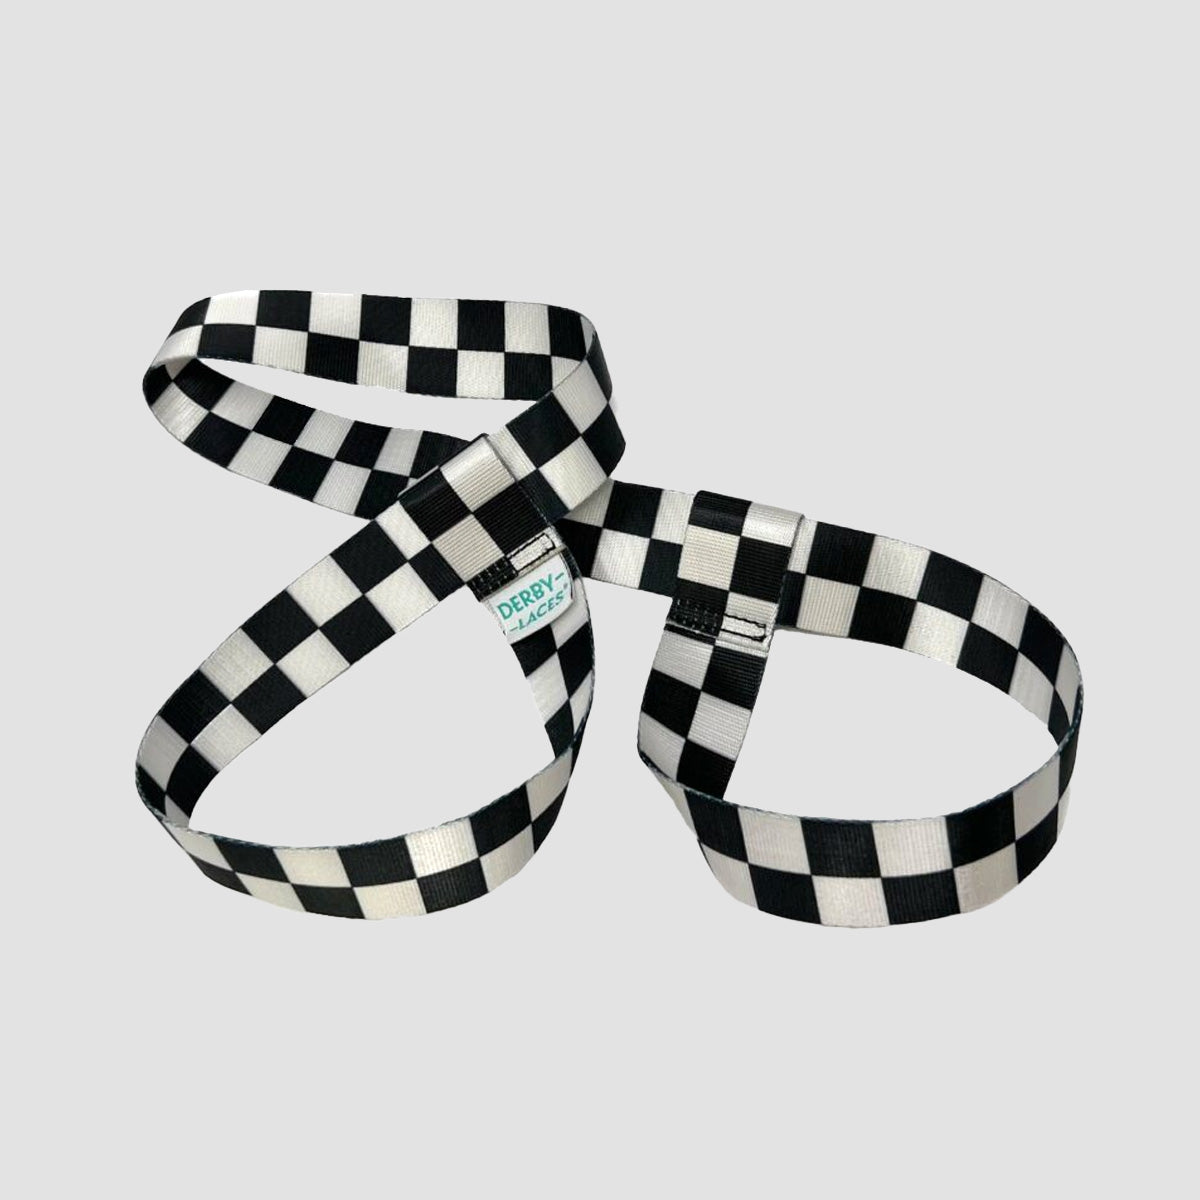 Derby Laces Skate Strap - Gear Leash Checkered Black/White 198cm